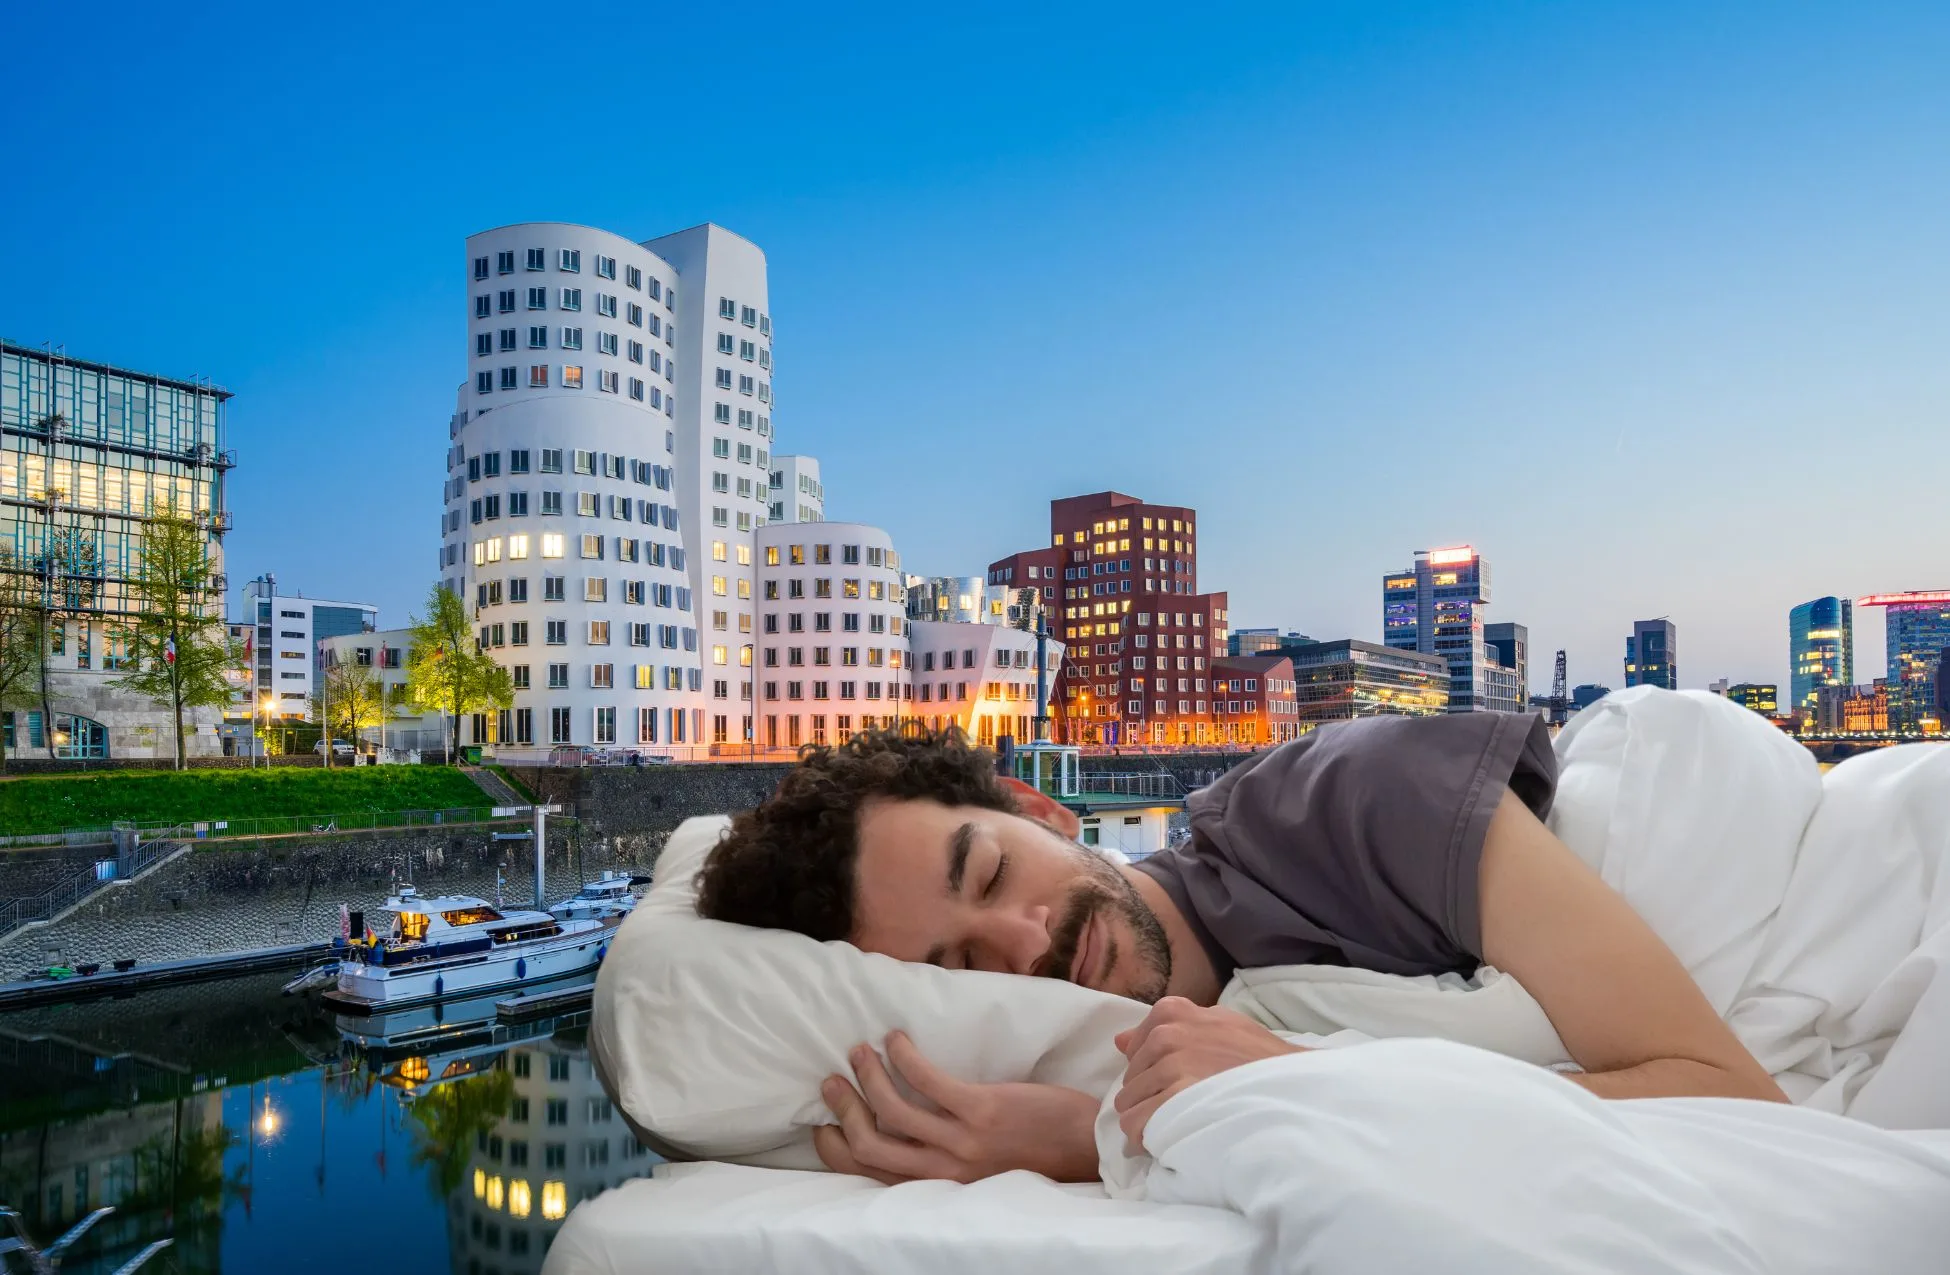 Best Hotels In Düsseldorf Top Spots For Unforgettable Stays!